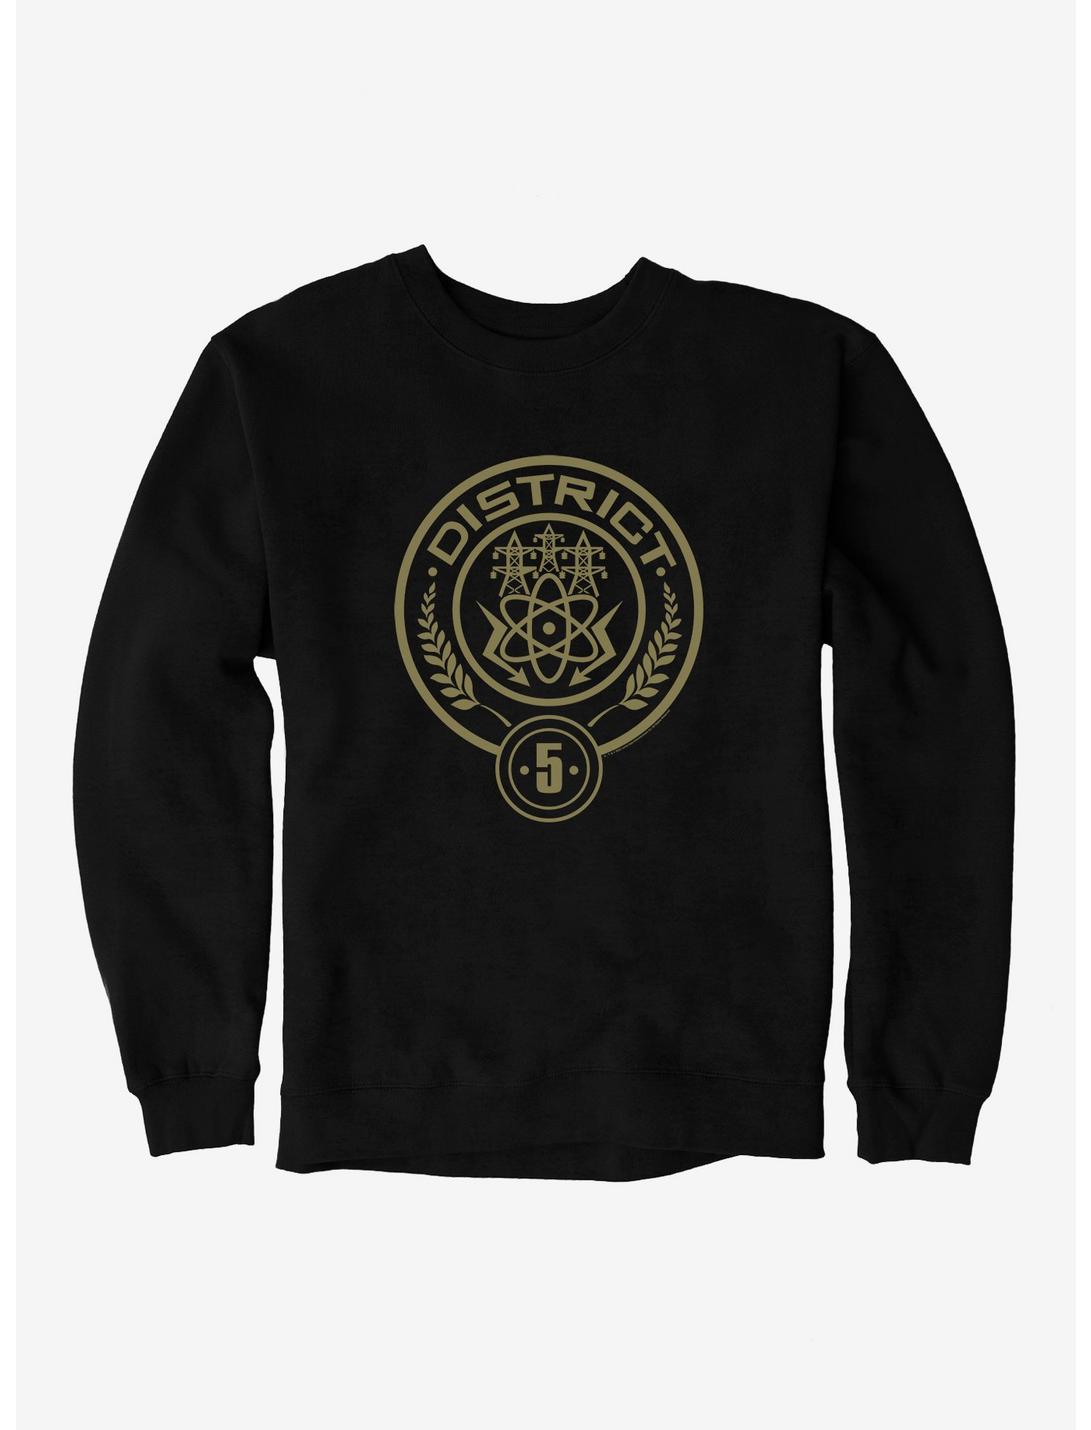 Hunger Games District 5 Logo Sweatshirt, BLACK, hi-res